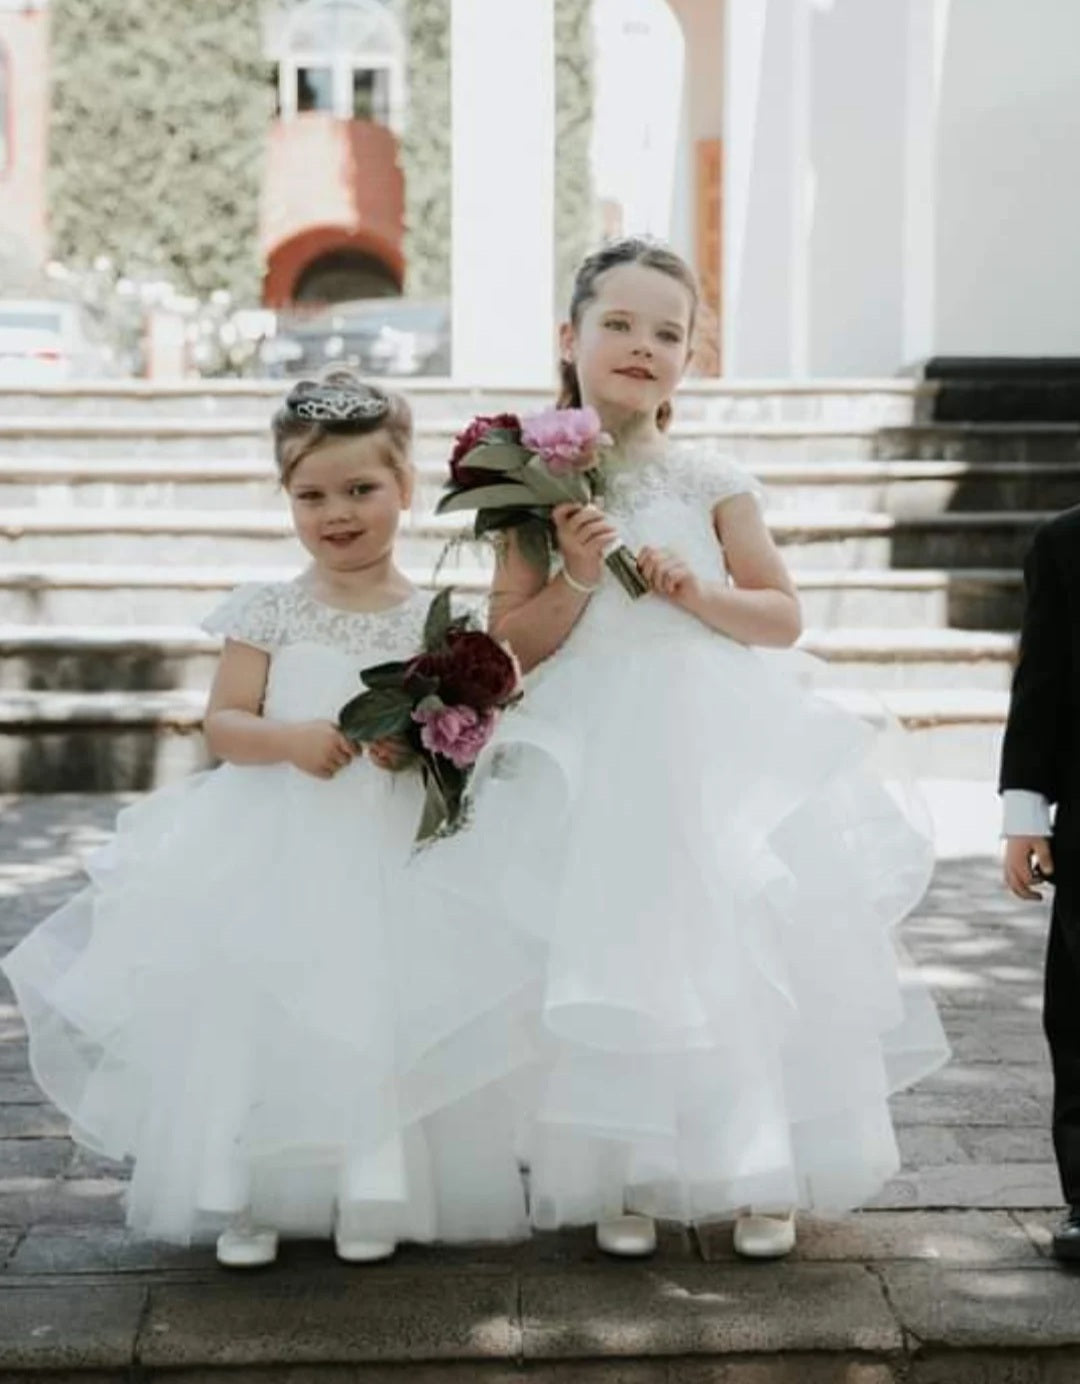 Flower Girl Dresses | Lace Flower Girl Dresses For Weddings Australia – A  Little Lacey